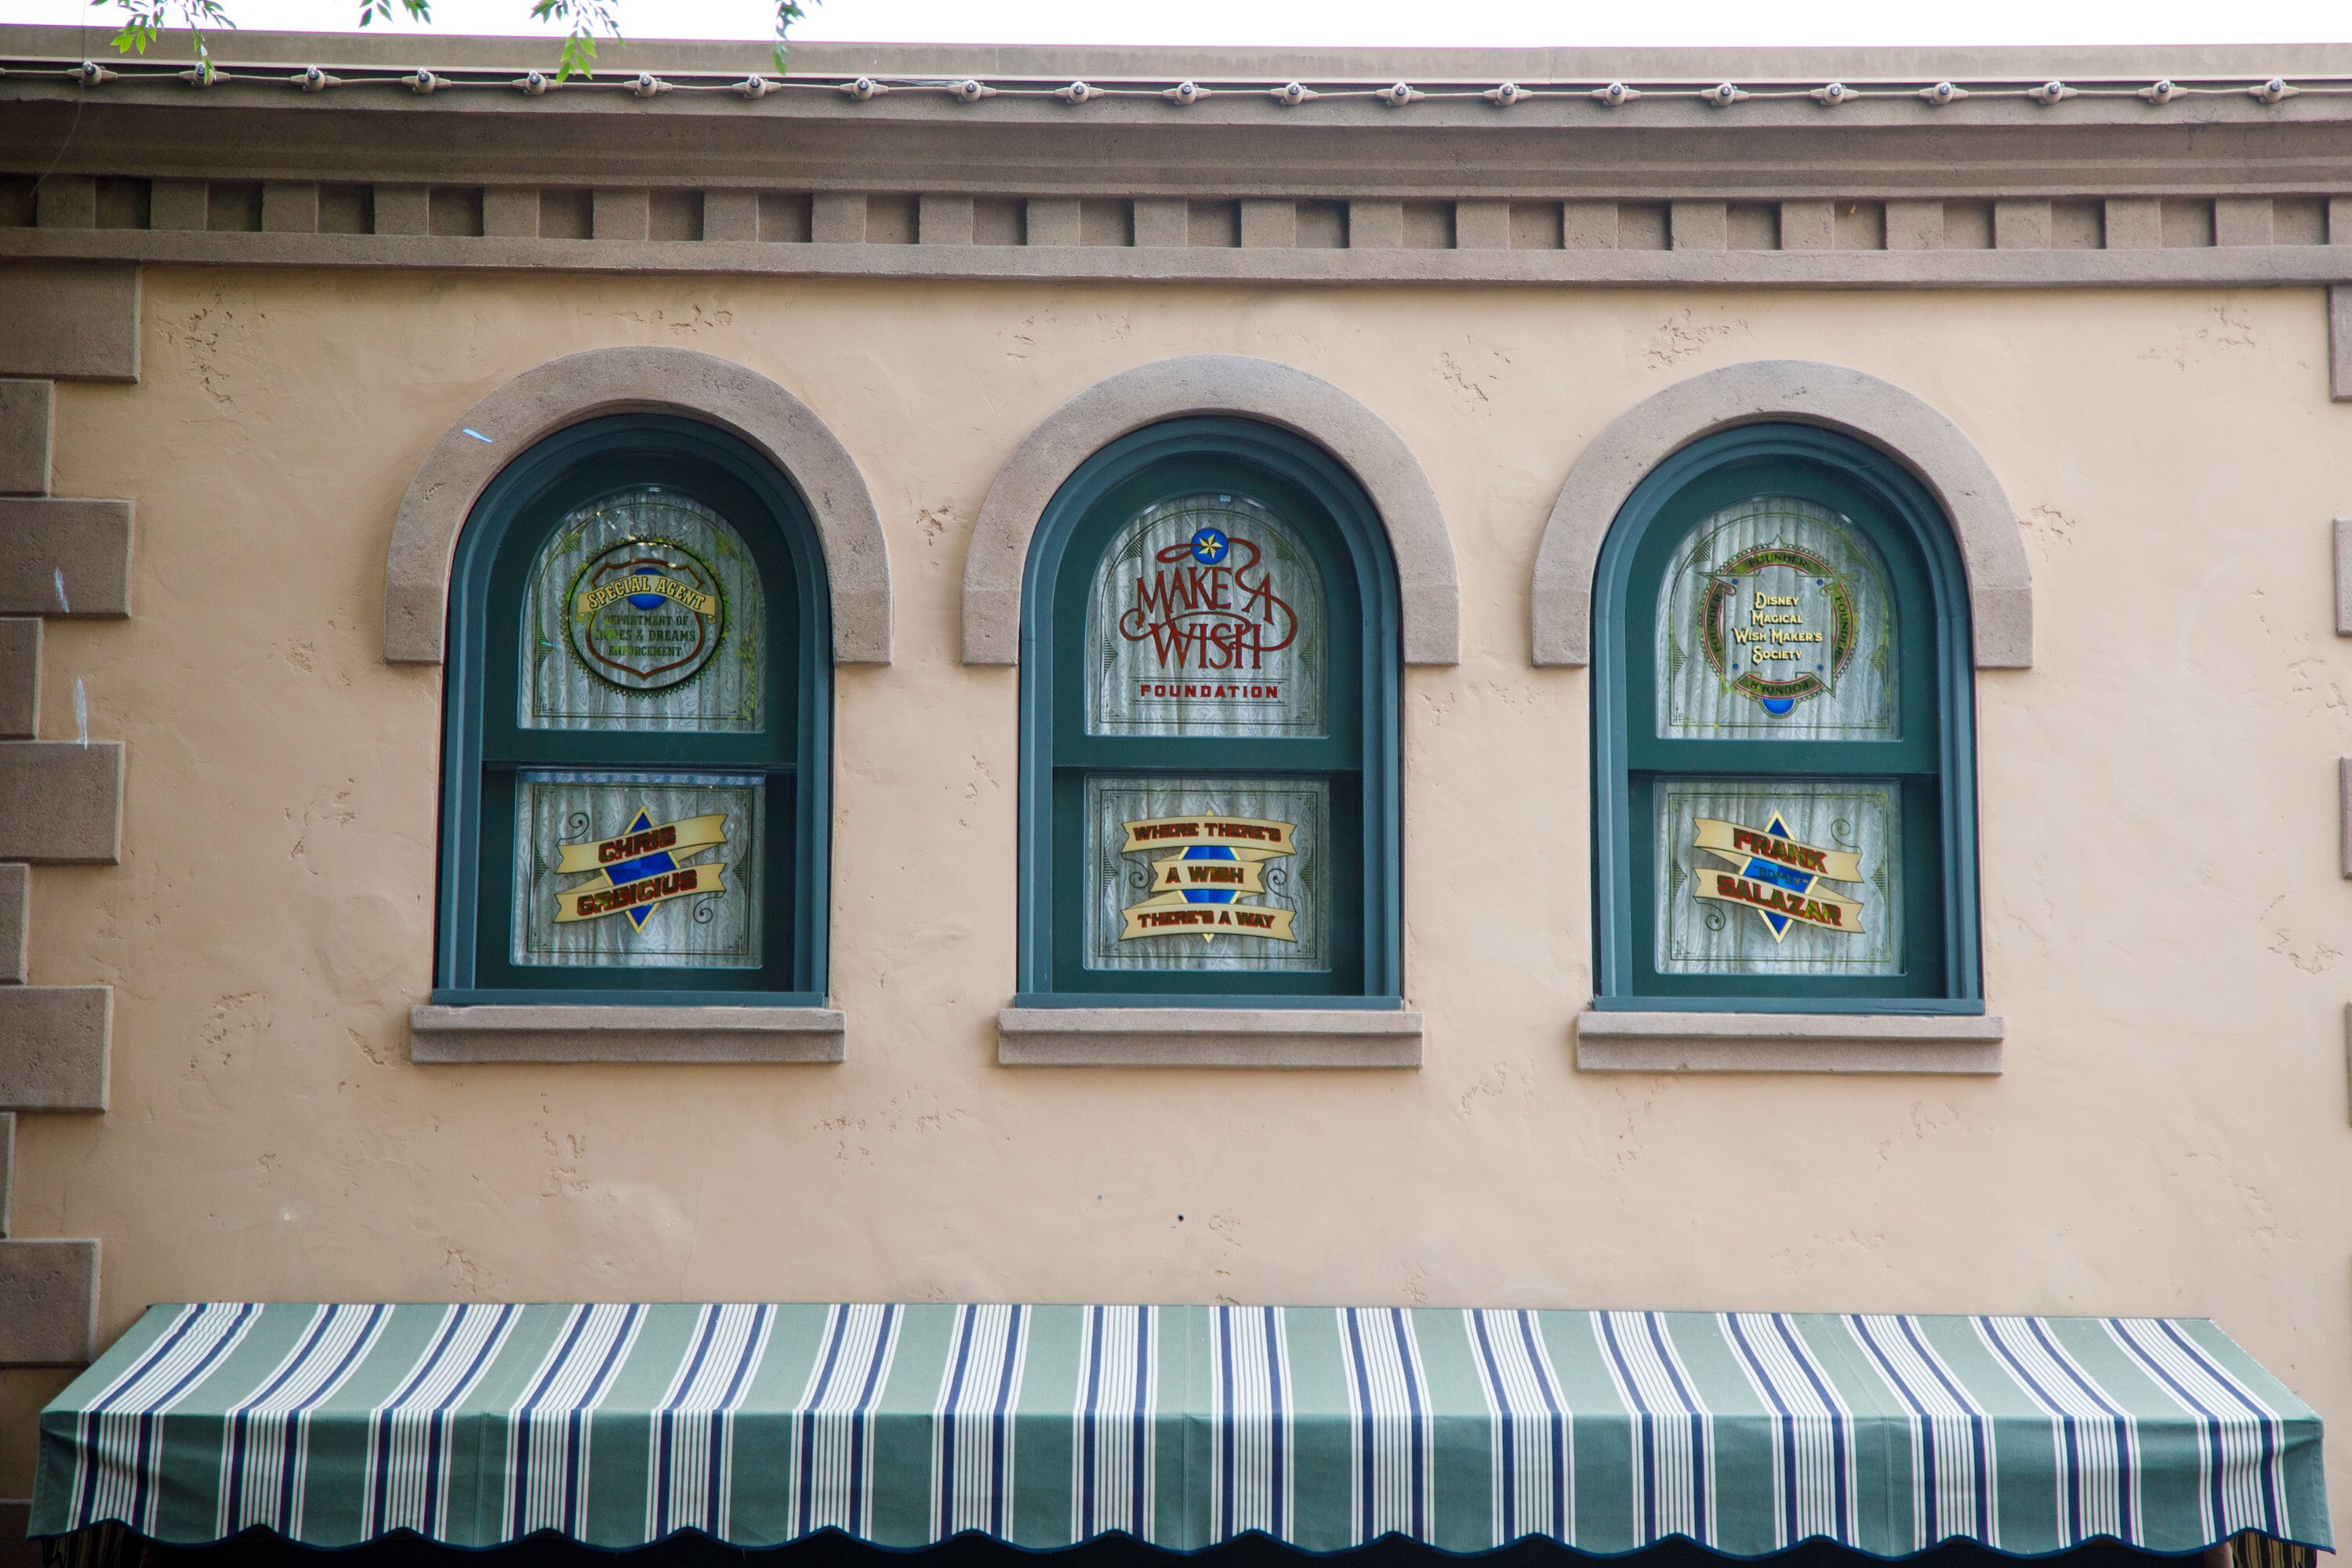 The new windows on Main Street, U.S.A.